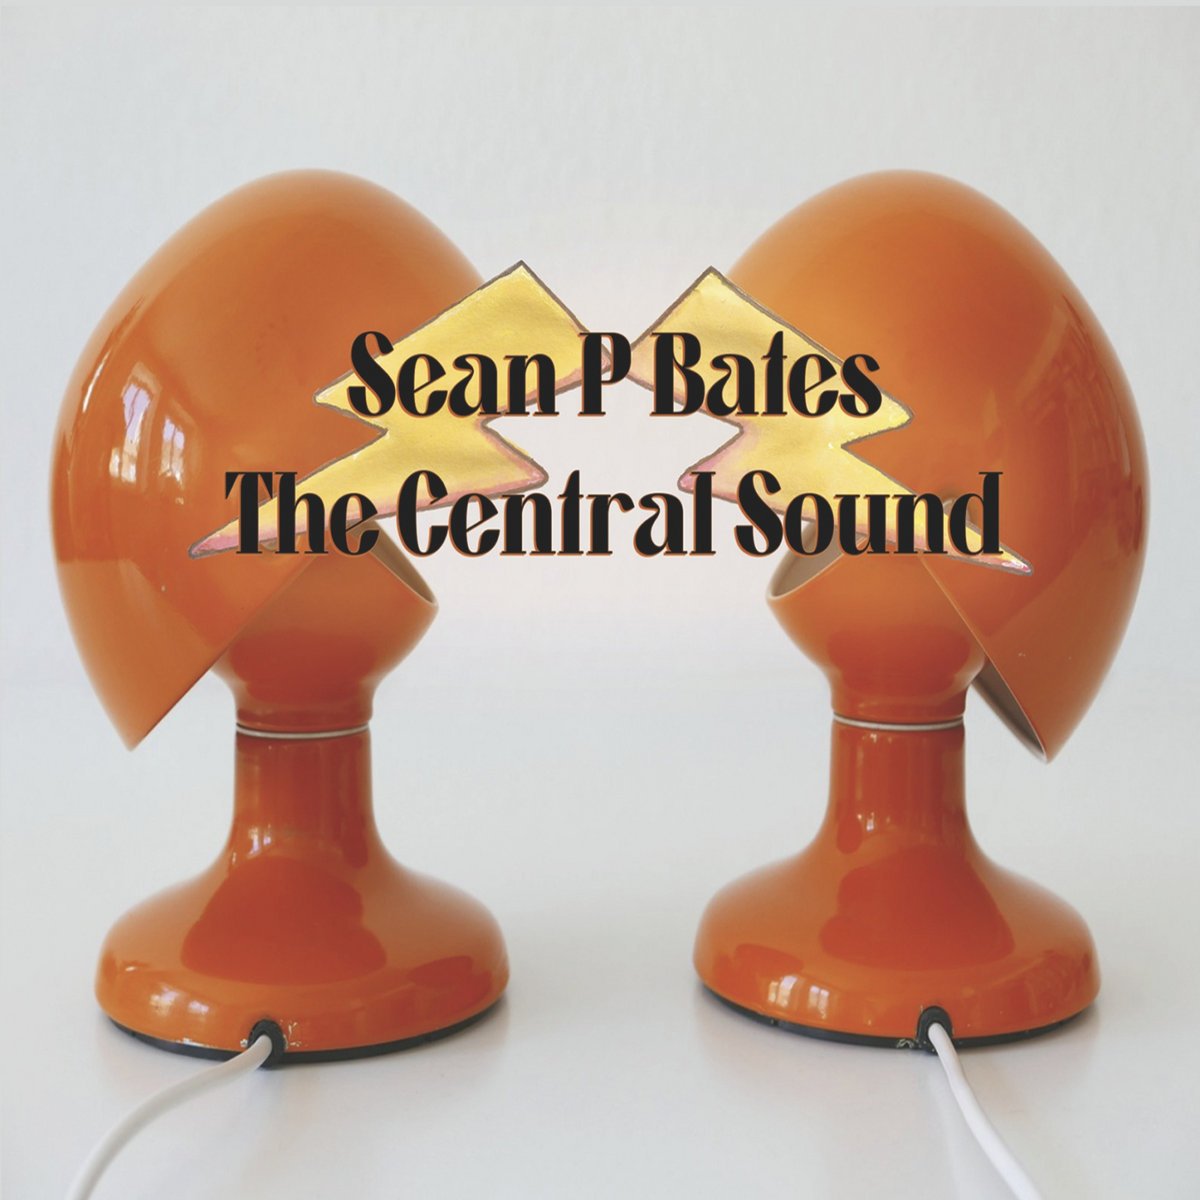 Sean P Bates - Central Sound